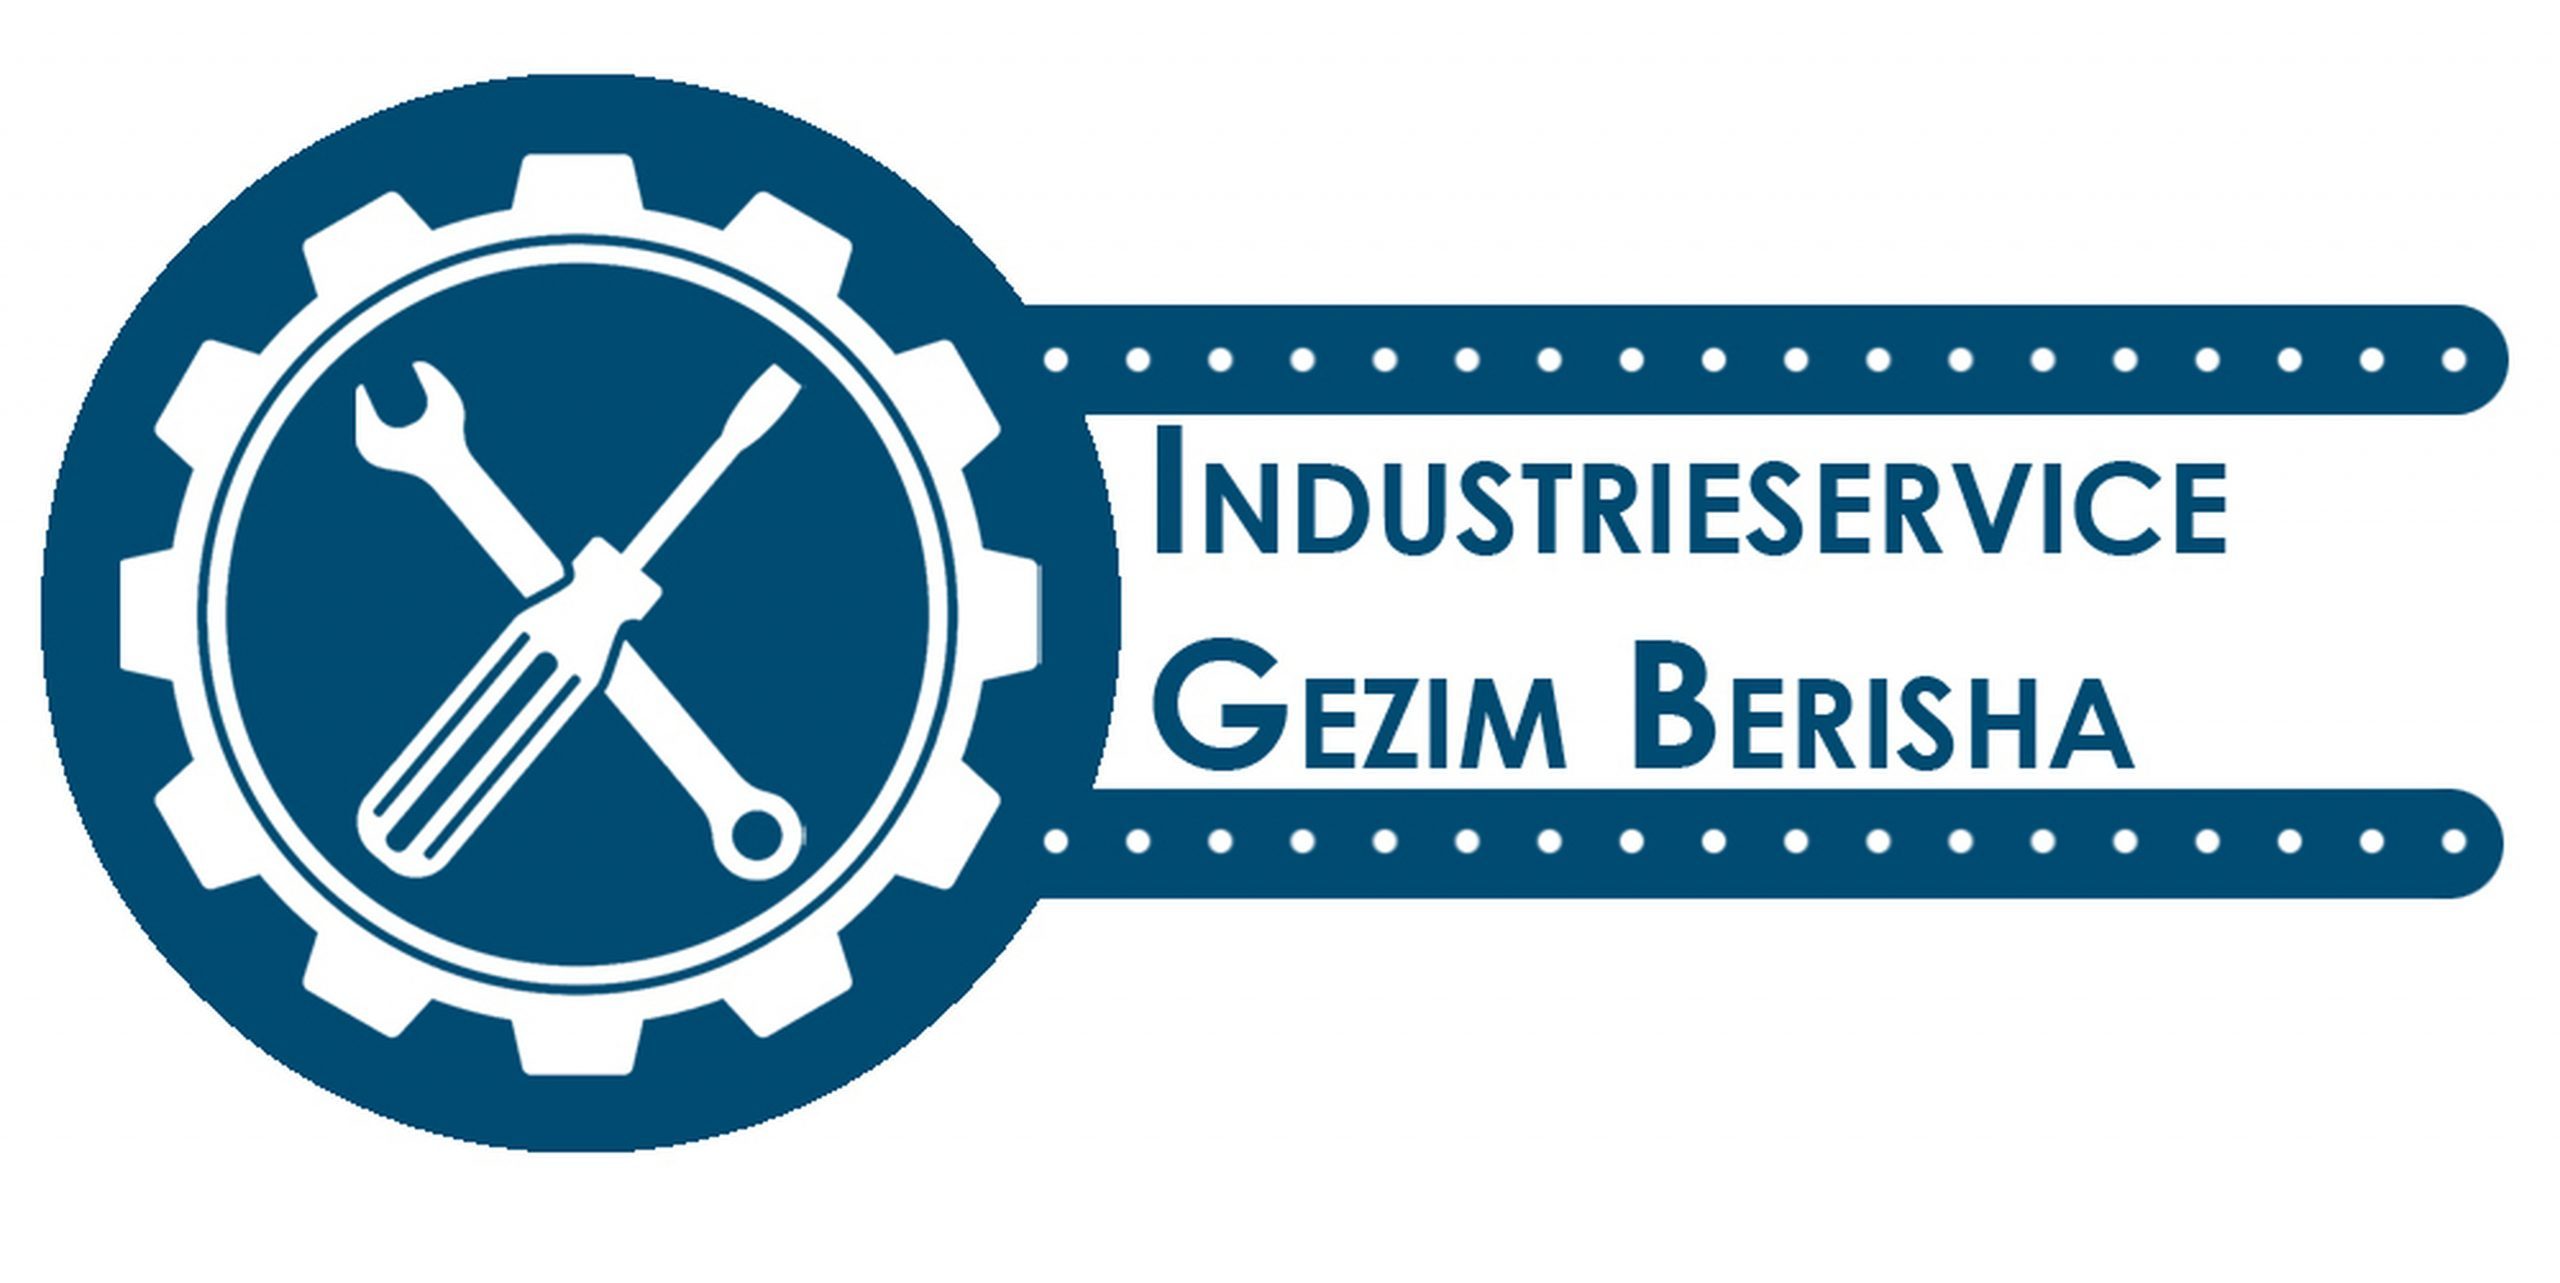 GB-Industrieservice